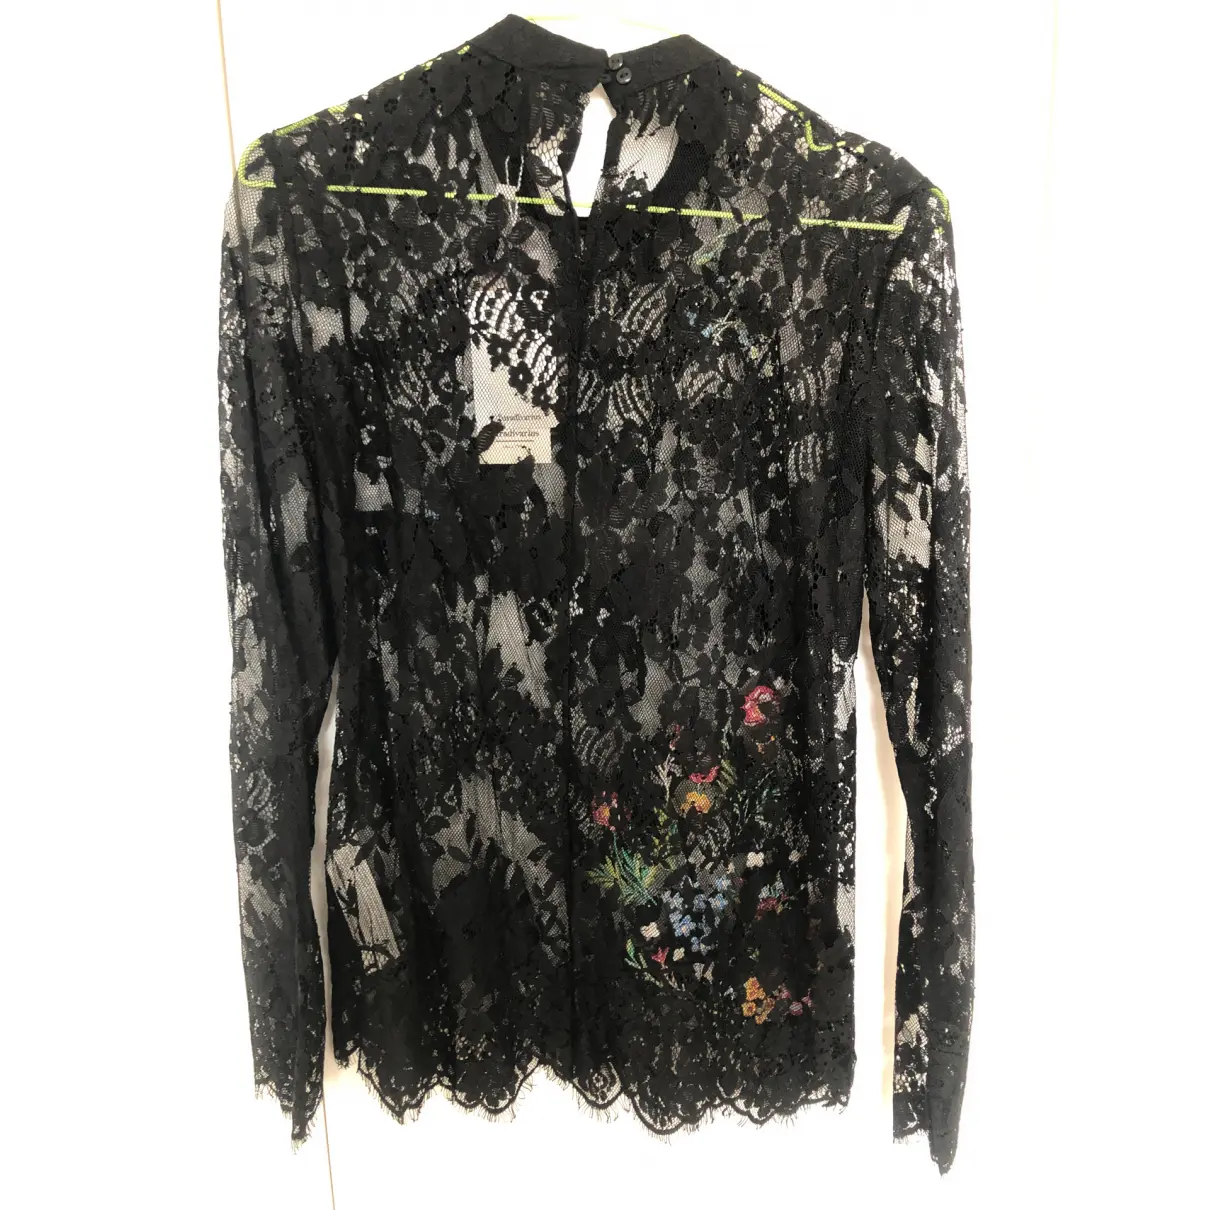 Buy STRADIVARIUS Lace blouse online